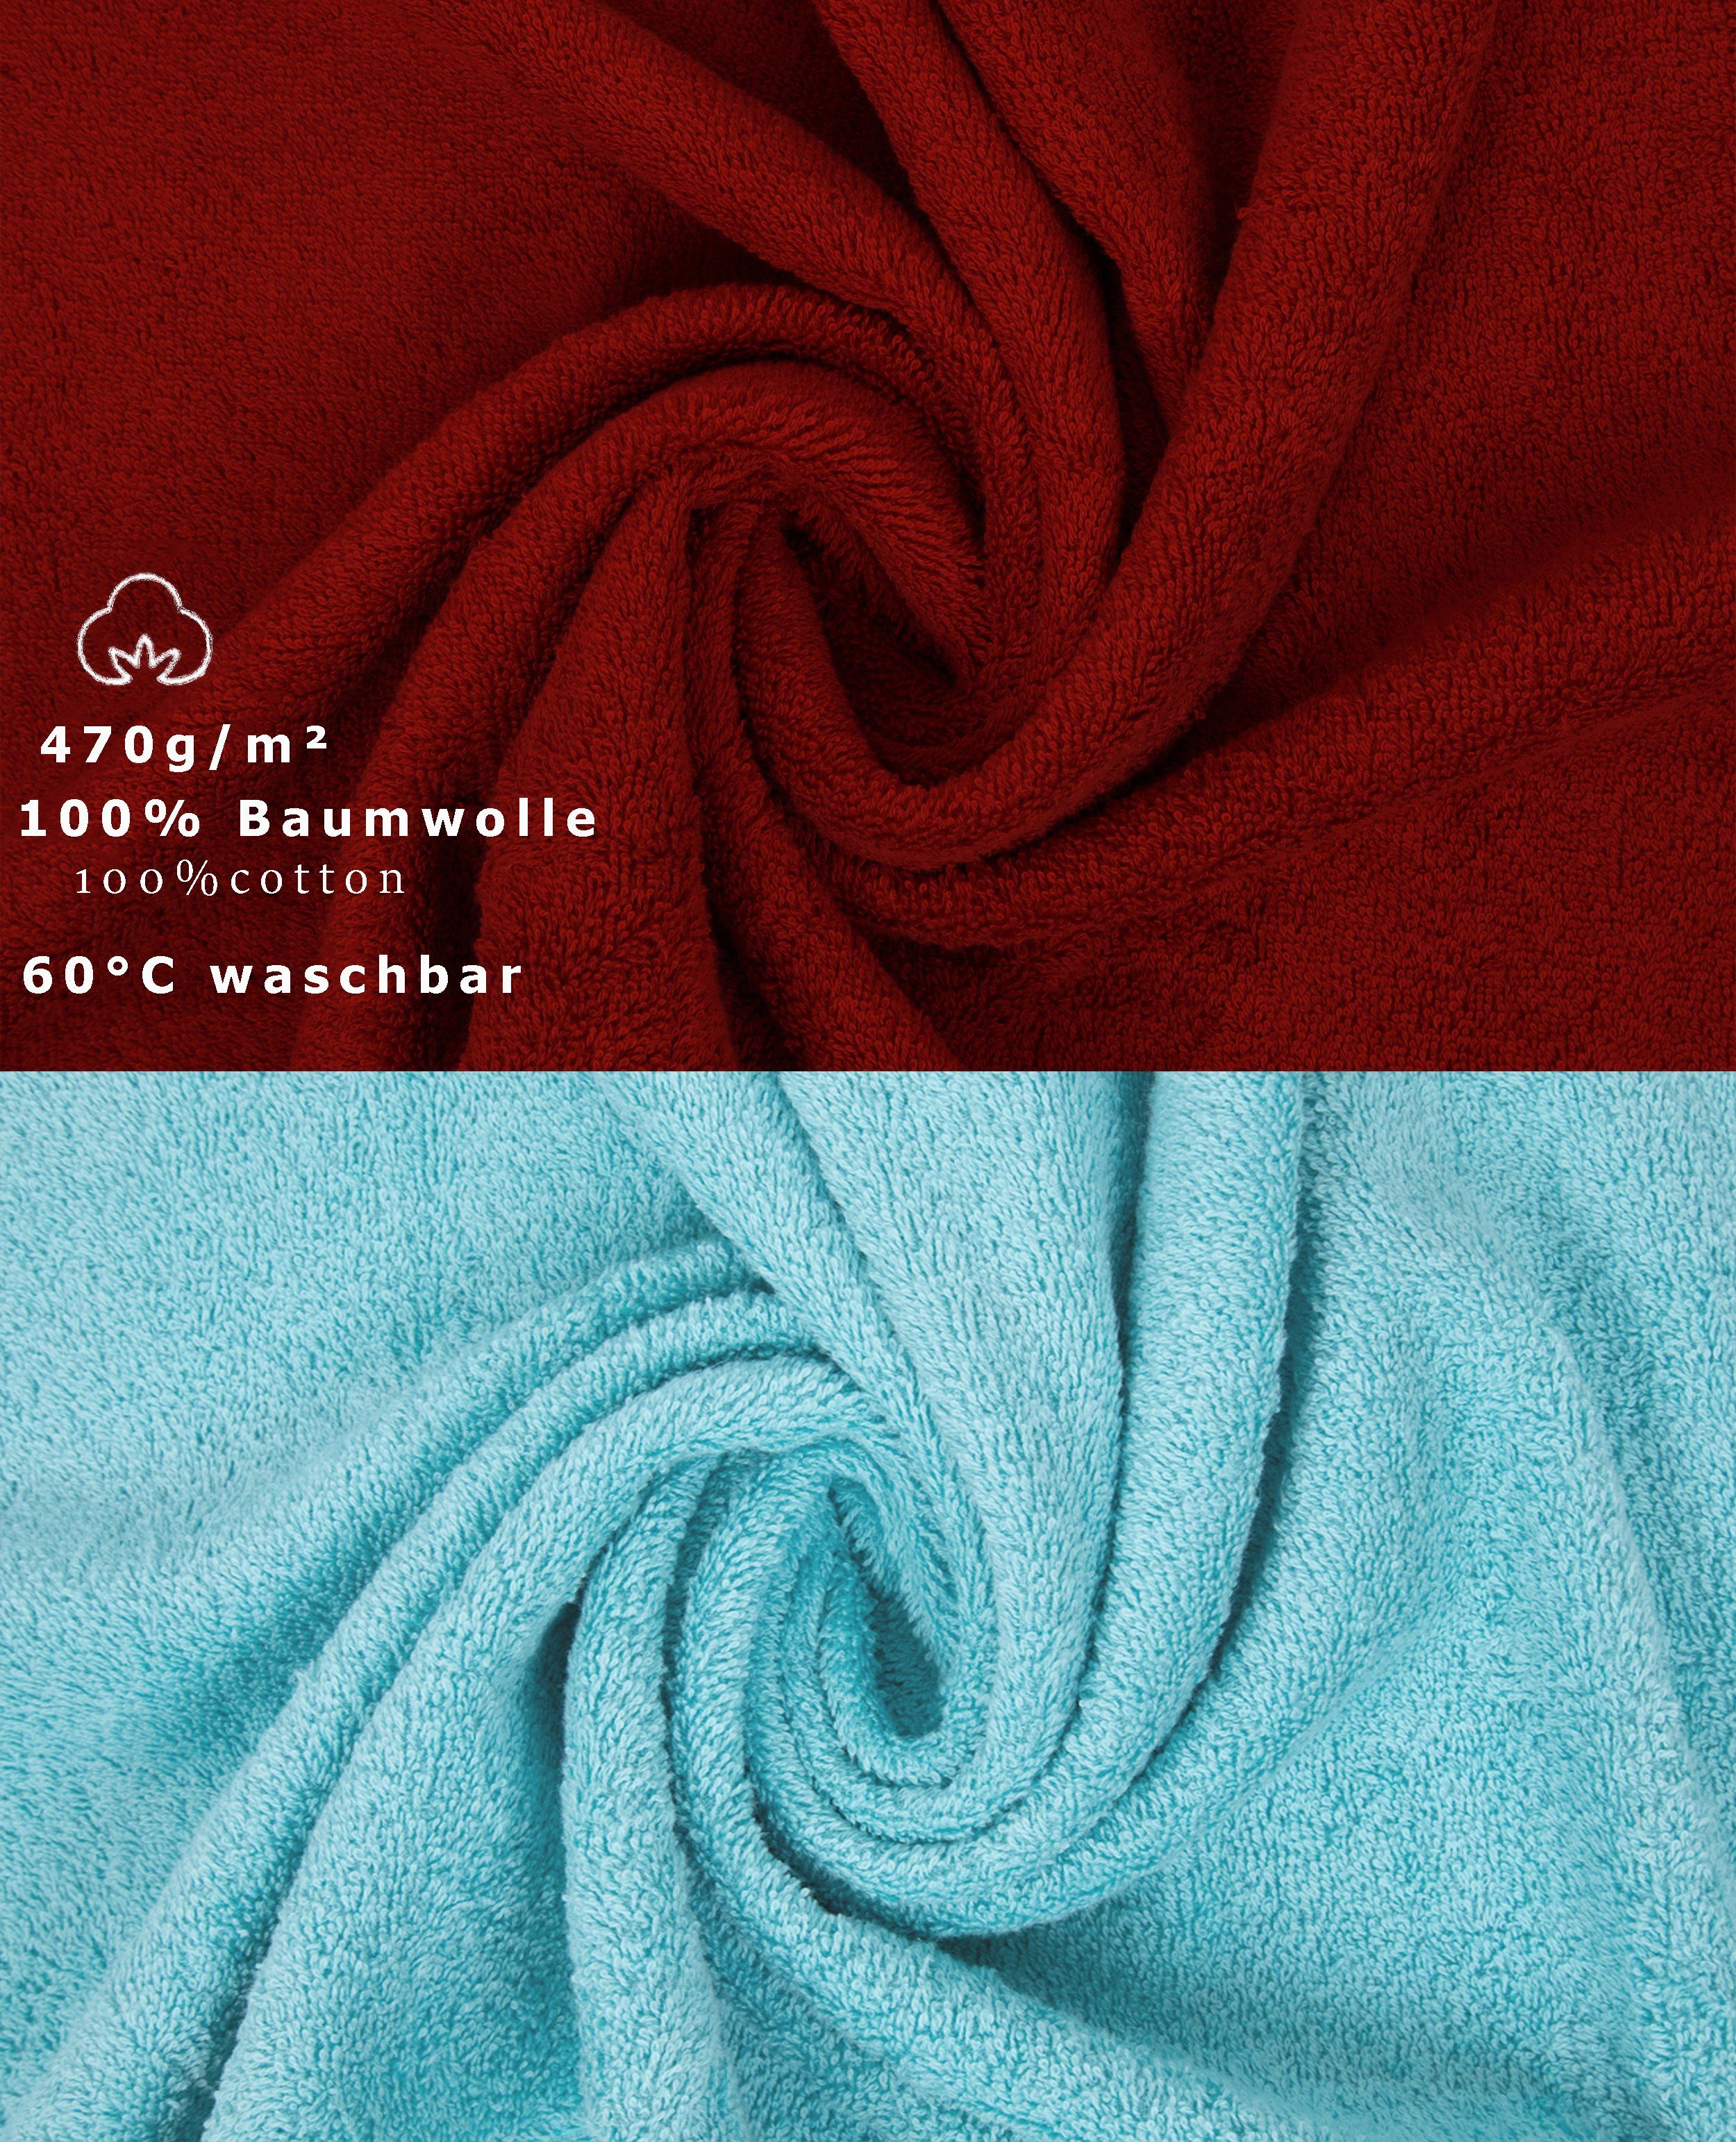 Betz Handtuch Set 12-tlg. Handtuch (12-tlg) Farbe Premium rubinrot/Ocean, 100% Set Baumwolle